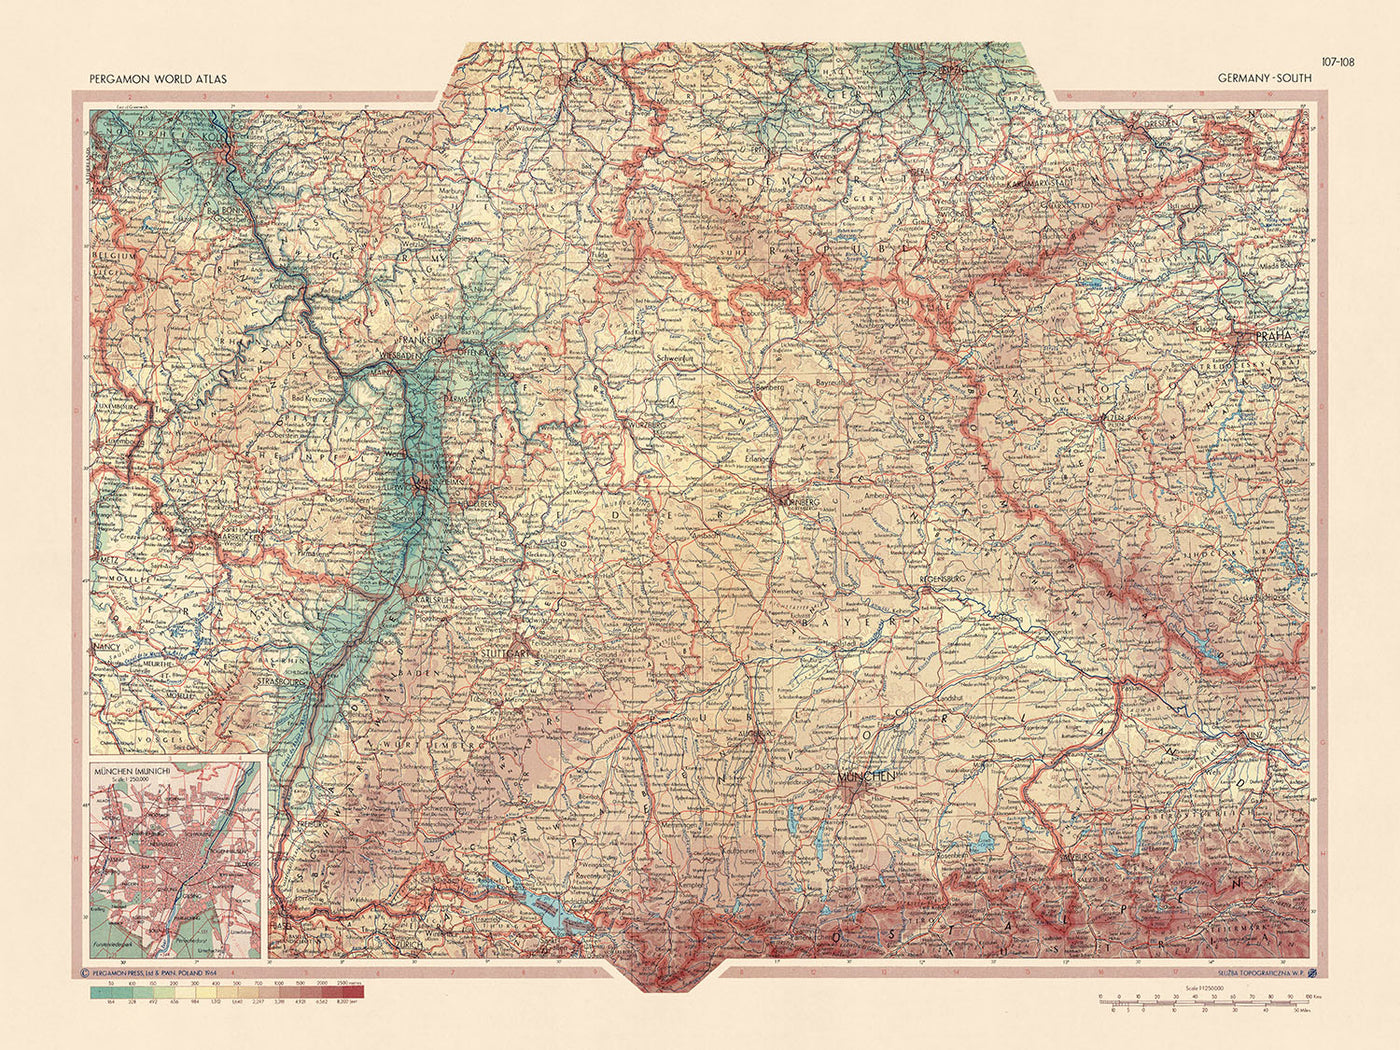 Old Map of Southern Germany, 1967: Rhineland-Palatinate, Baden-Württemberg, Thuringia, Hesse, Bavaria